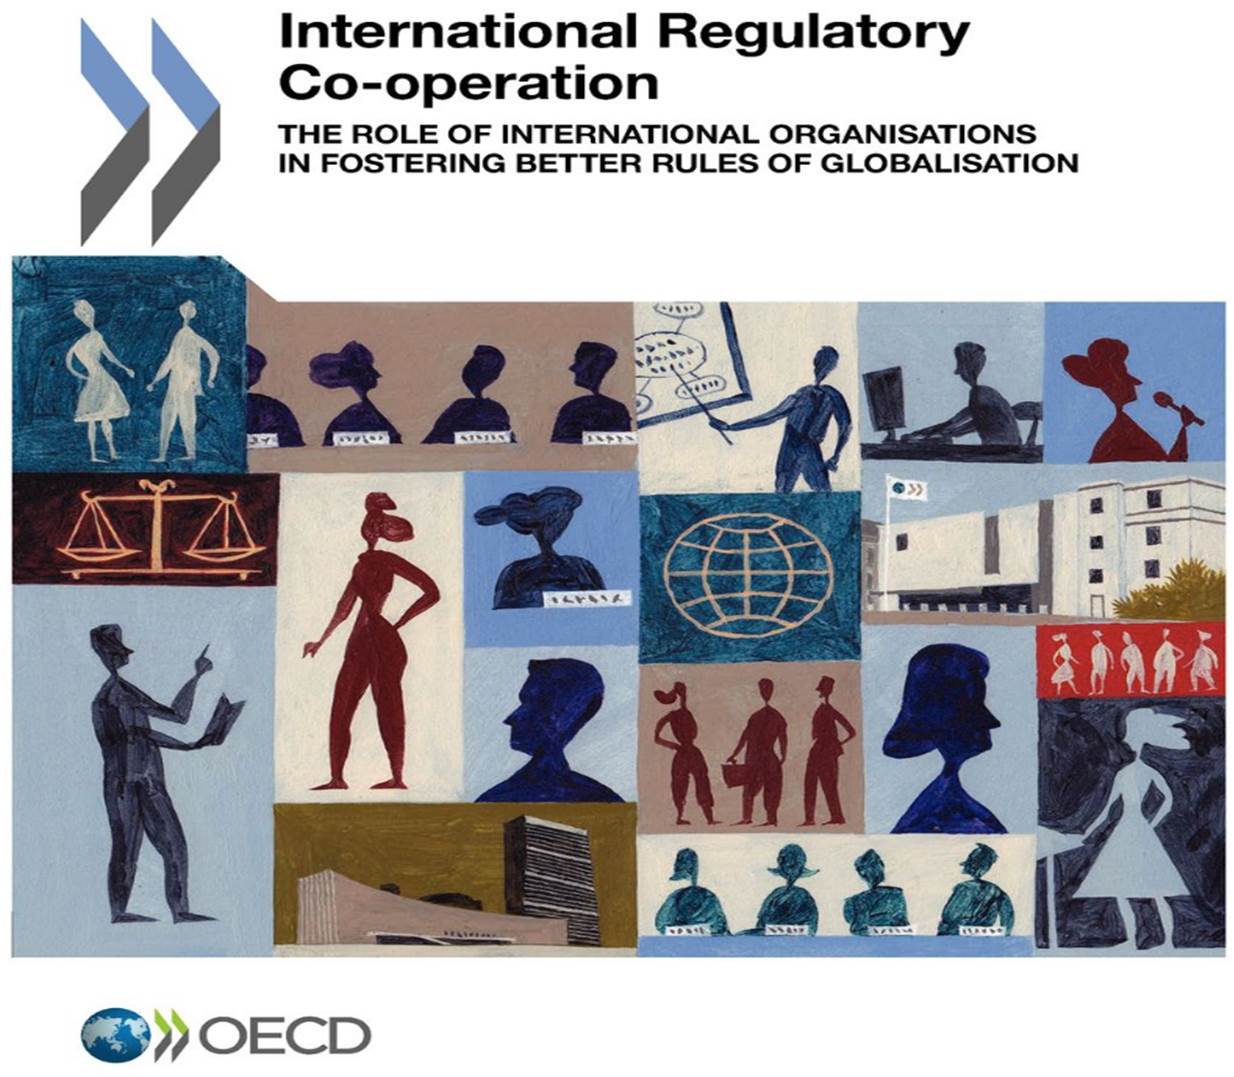 Global Accreditation Systems contribute to International Regulatory Co-operation (OECD, 2016)